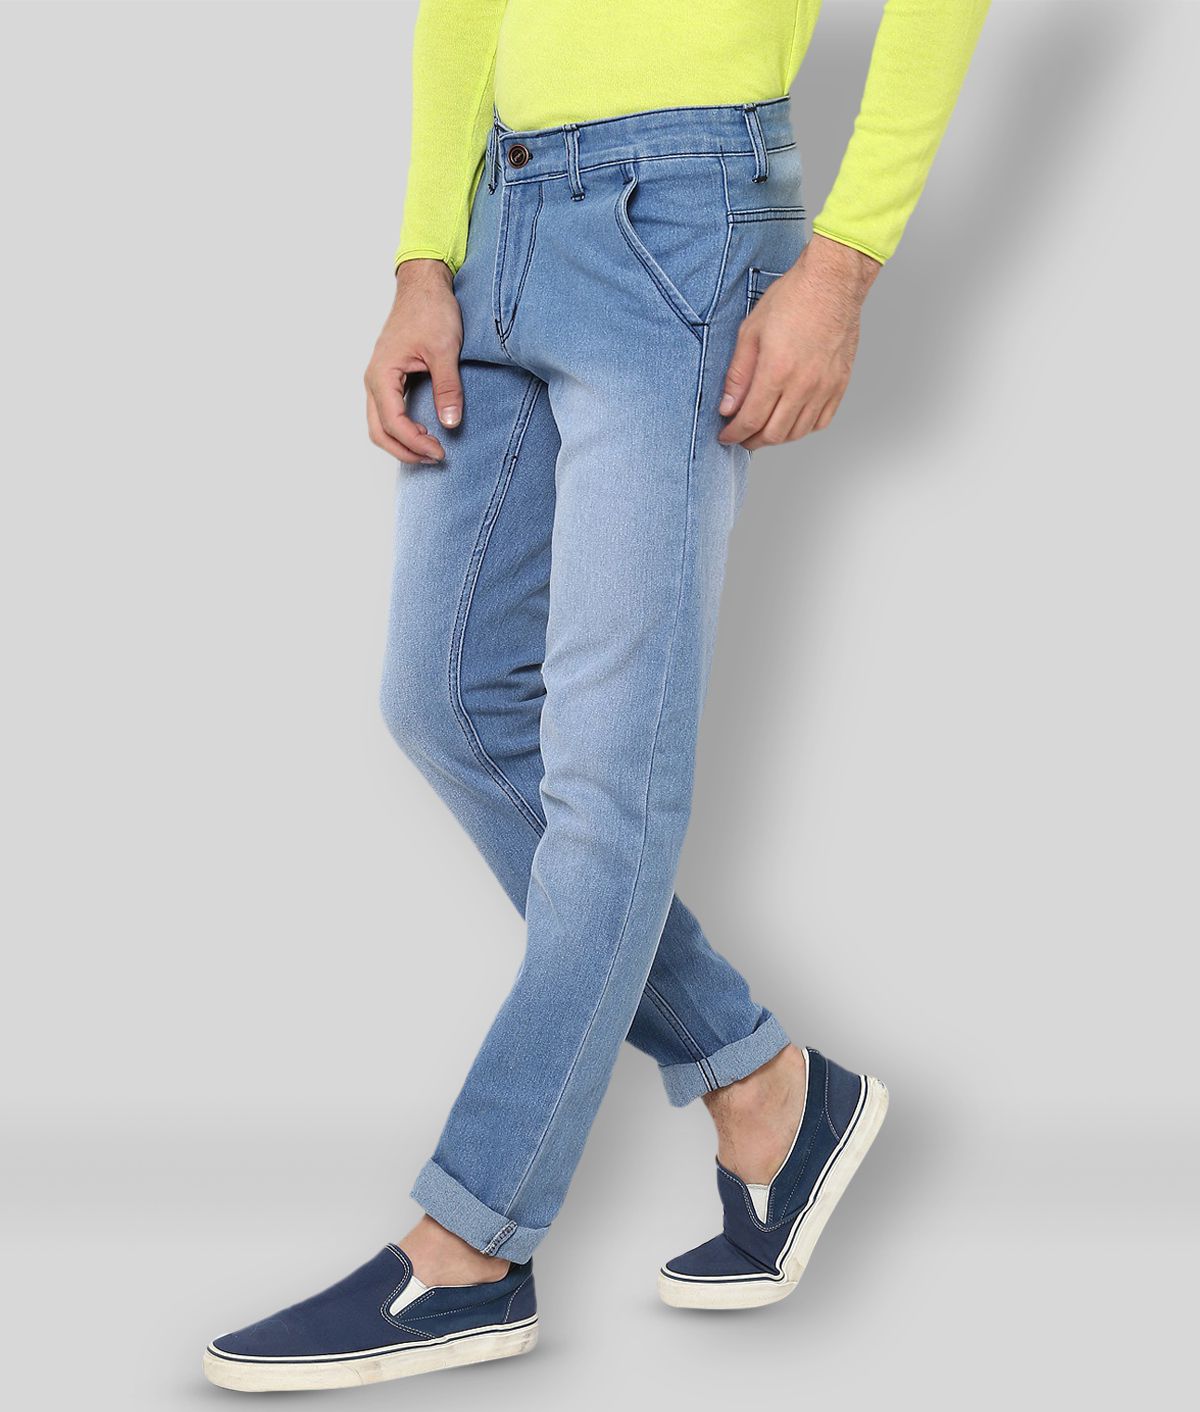 Urbano Fashion - Light Blue Cotton Blend Slim Fit Men's Jeans ( Pack of 1 )